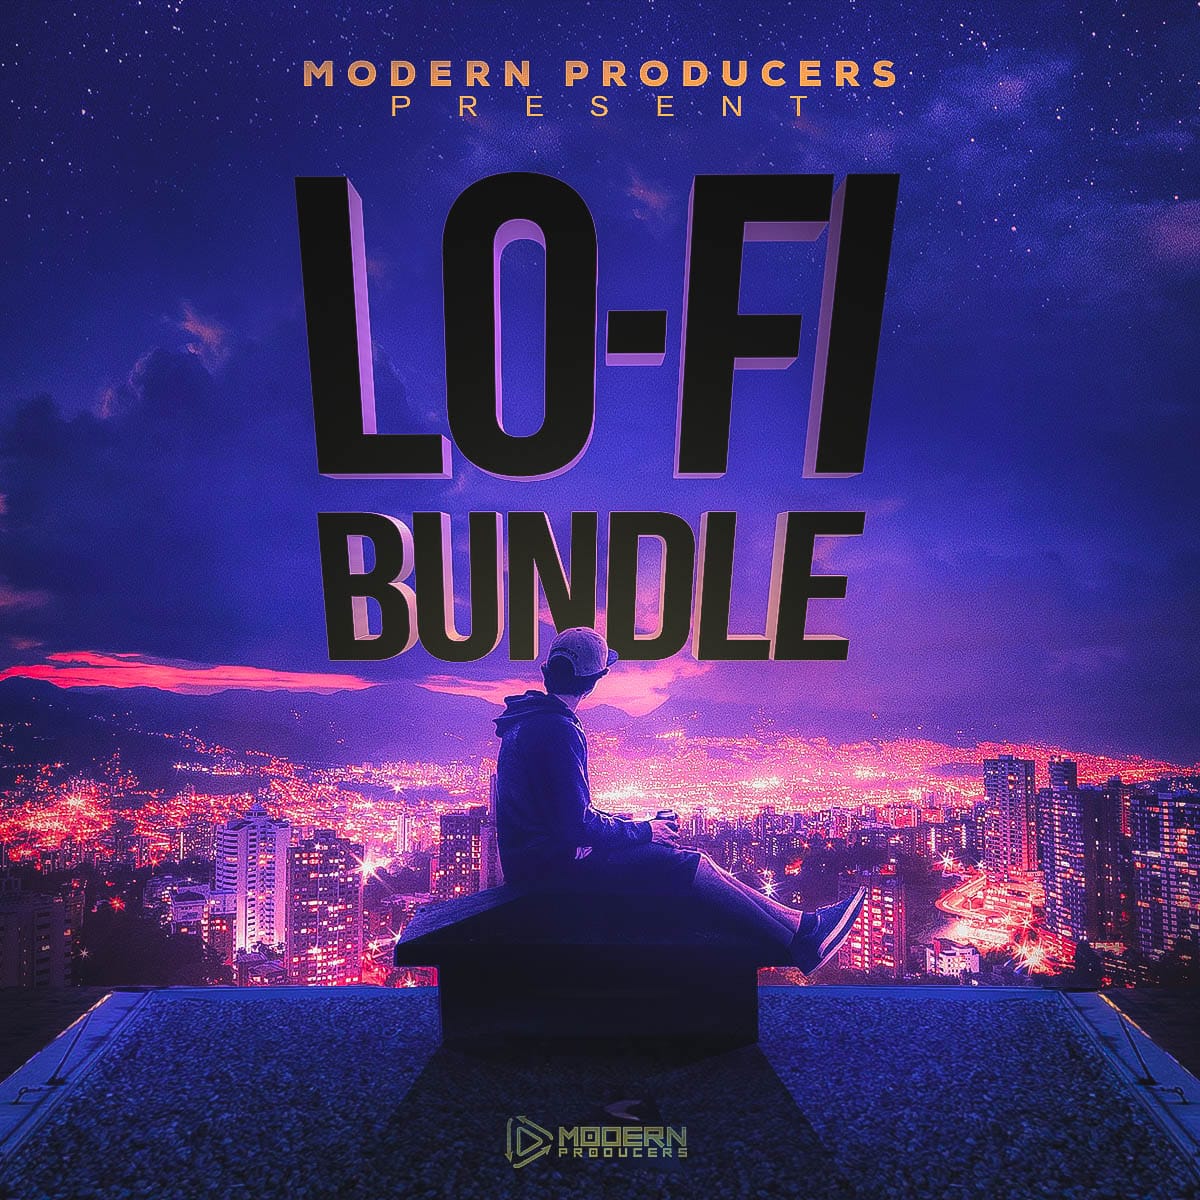 97% off “Lo-Fi Bundle” by Modern Producers